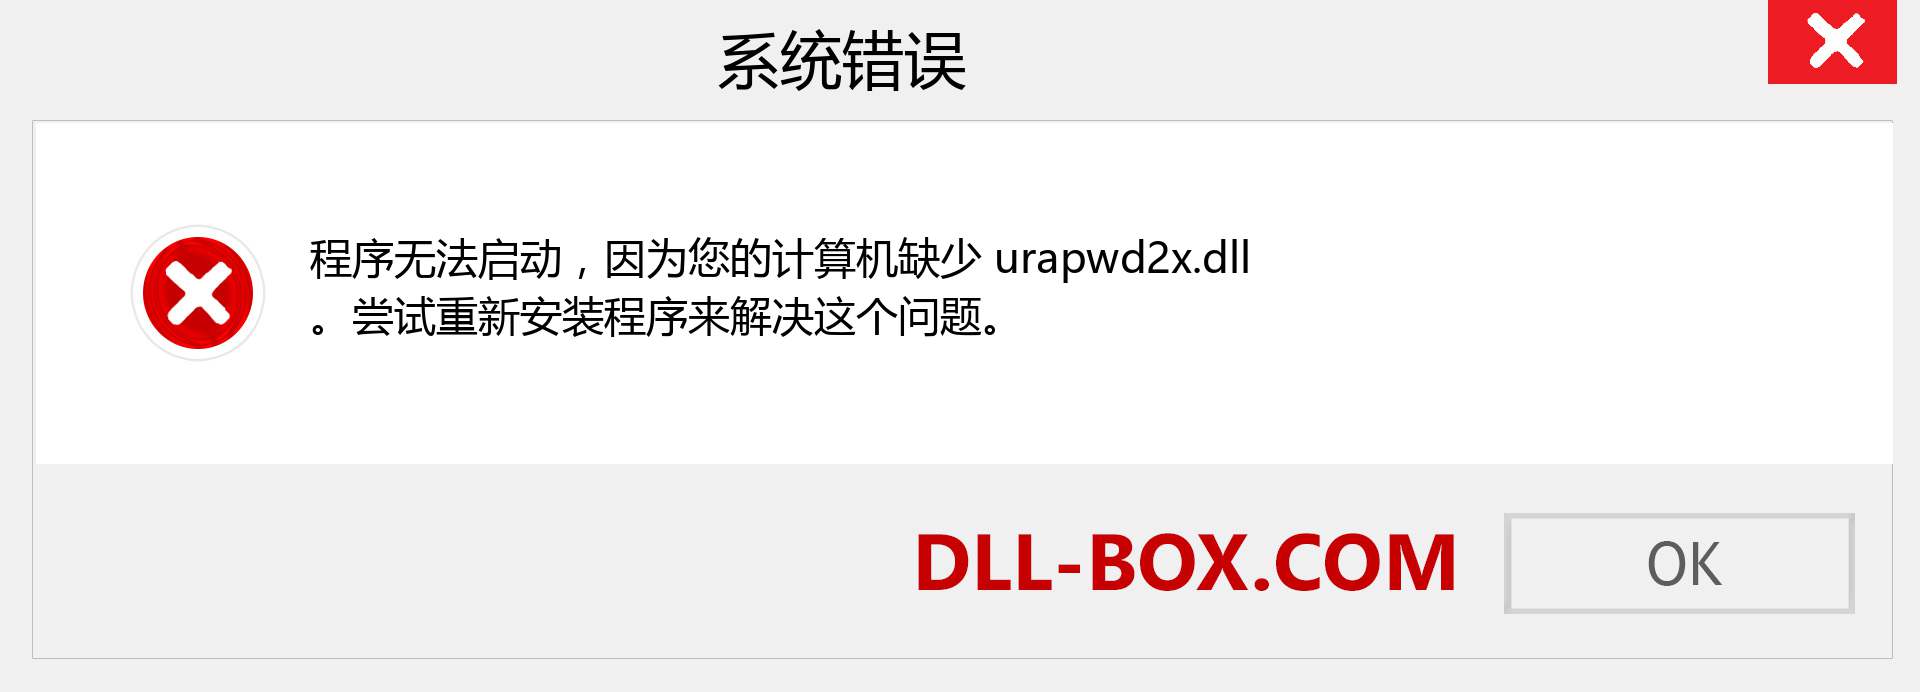 urapwd2x.dll 文件丢失？。 适用于 Windows 7、8、10 的下载 - 修复 Windows、照片、图像上的 urapwd2x dll 丢失错误